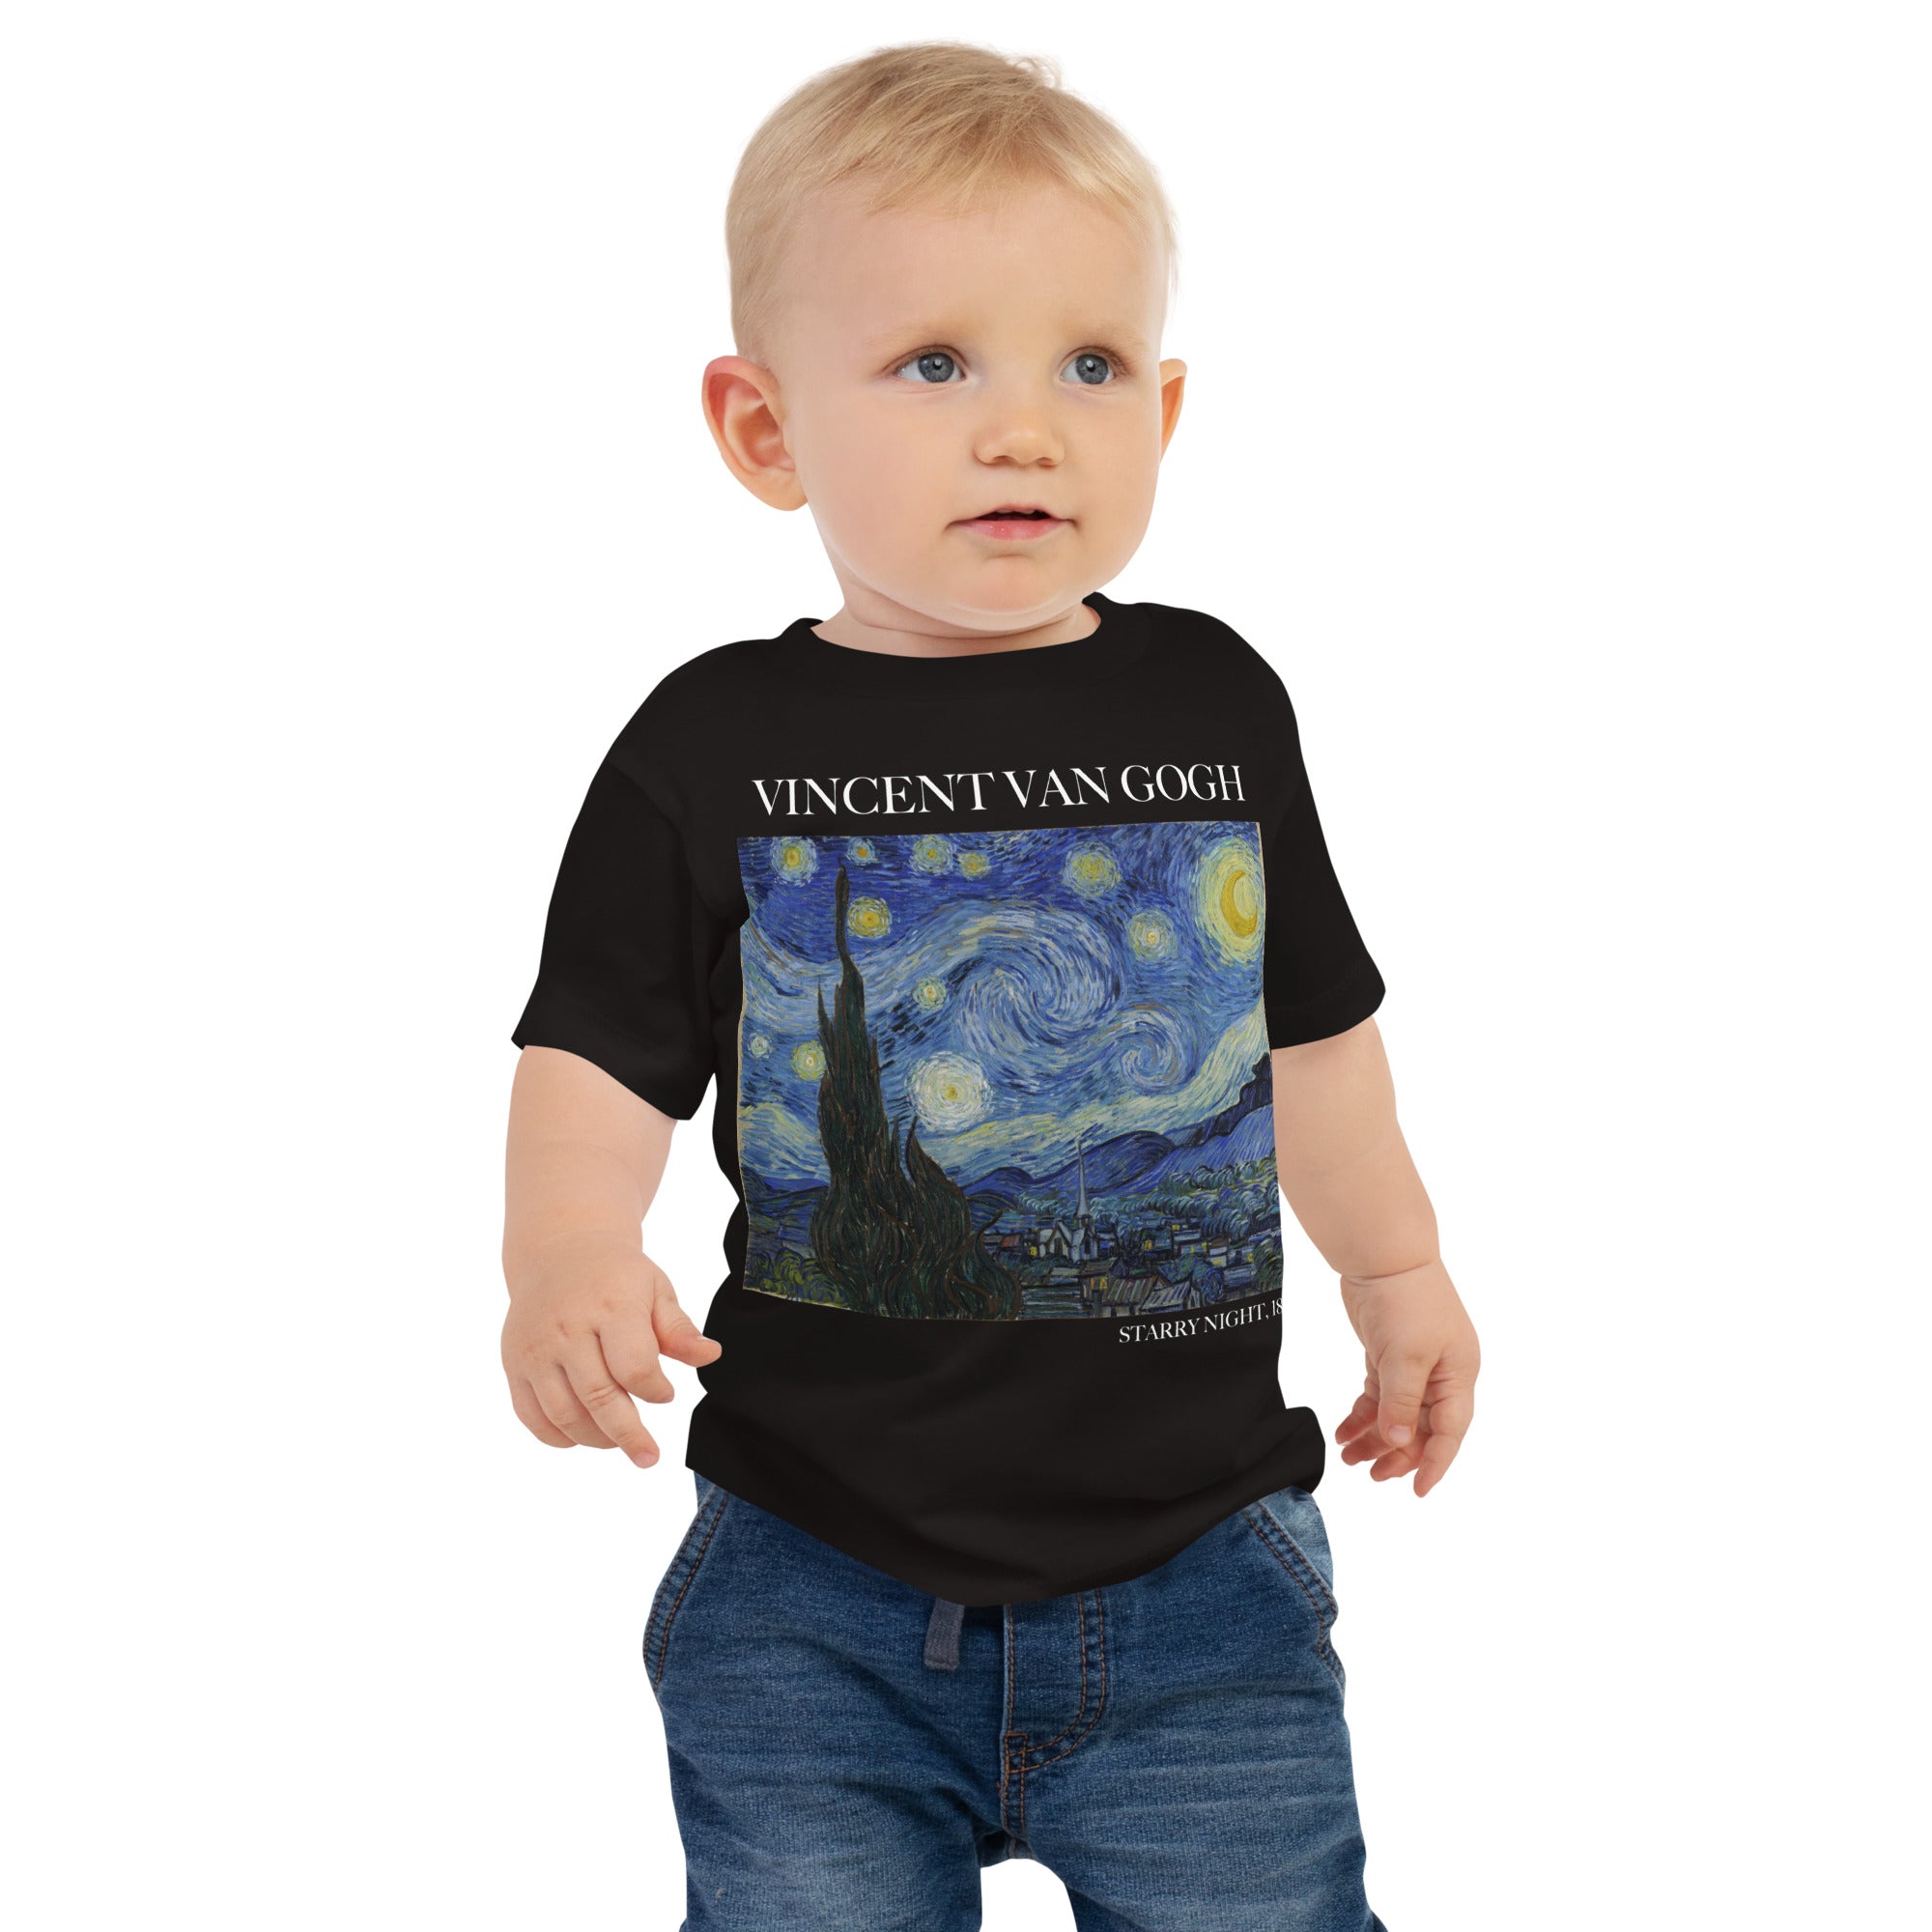 Vincent van Gogh 'Starry Night' Famous Painting Baby Staple T-Shirt | Premium Baby Art Tee